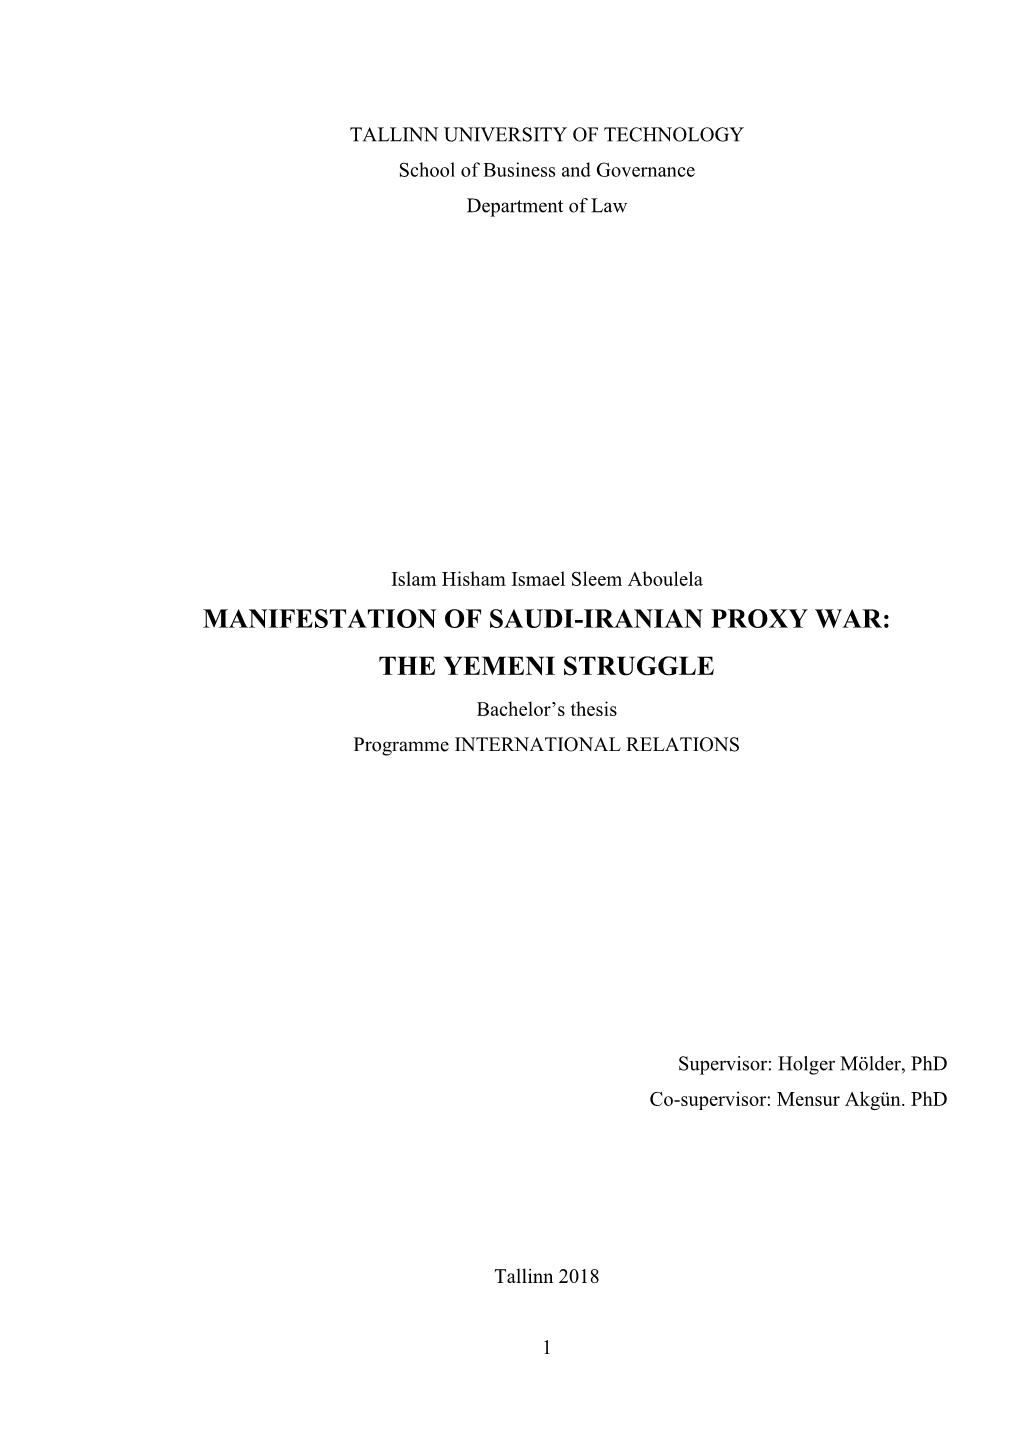 MANIFESTATION of SAUDI-IRANIAN PROXY WAR: the YEMENI STRUGGLE Bachelor’S Thesis Programme INTERNATIONAL RELATIONS